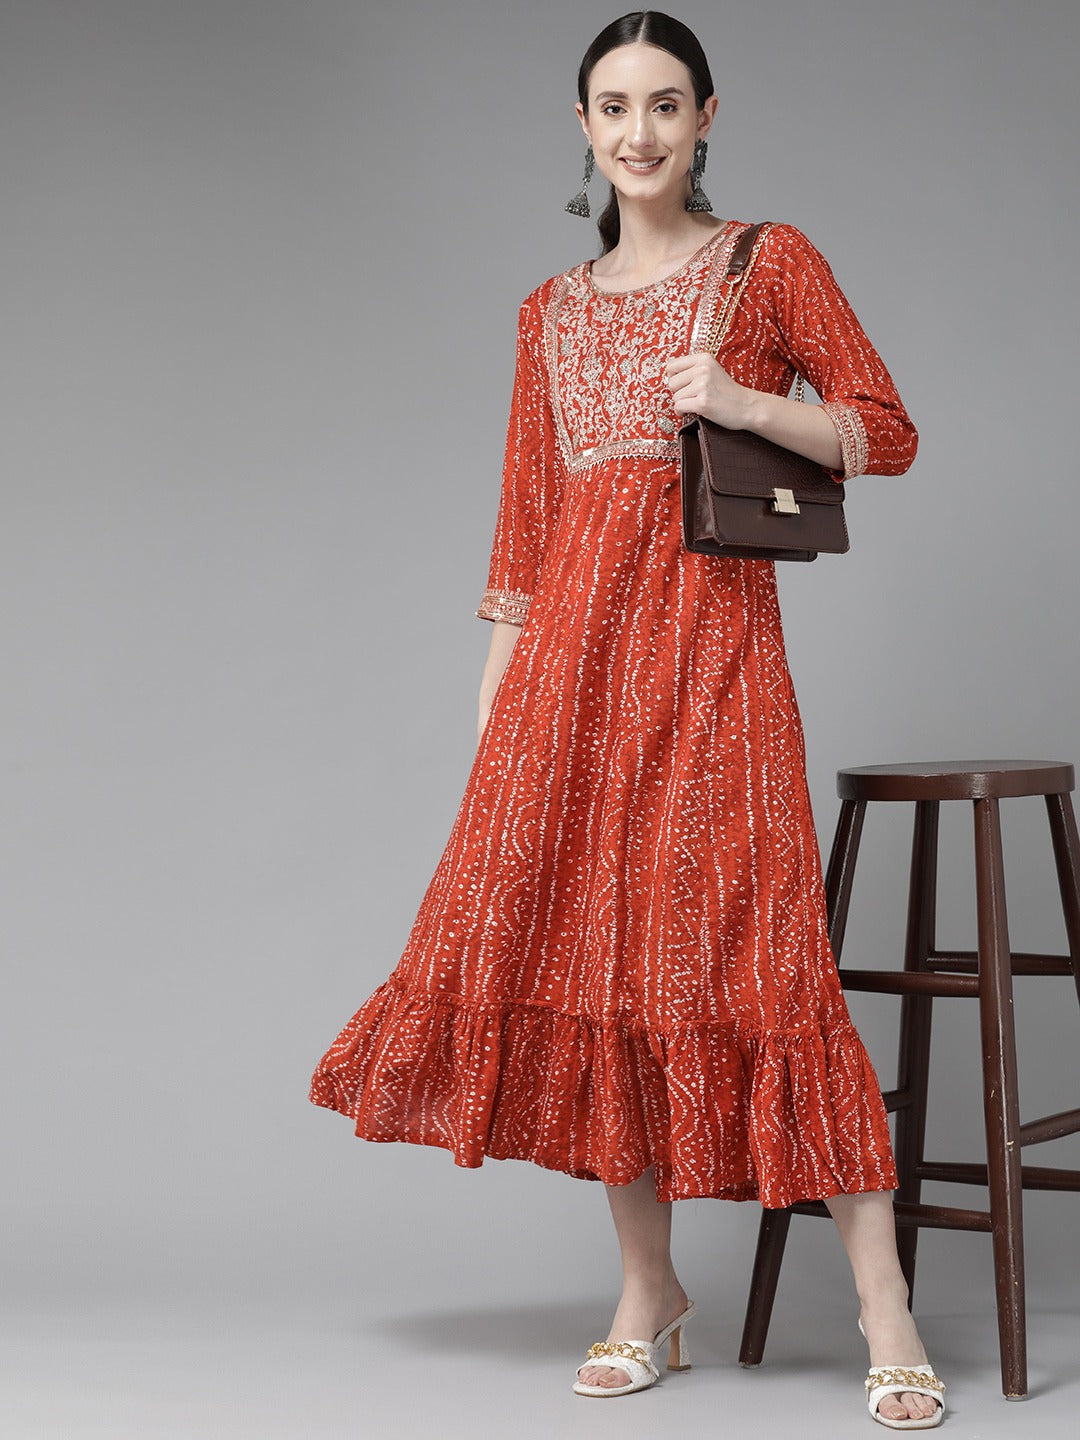 Red Ethnic Midi Dress-Yufta Store-6401DRSRDS